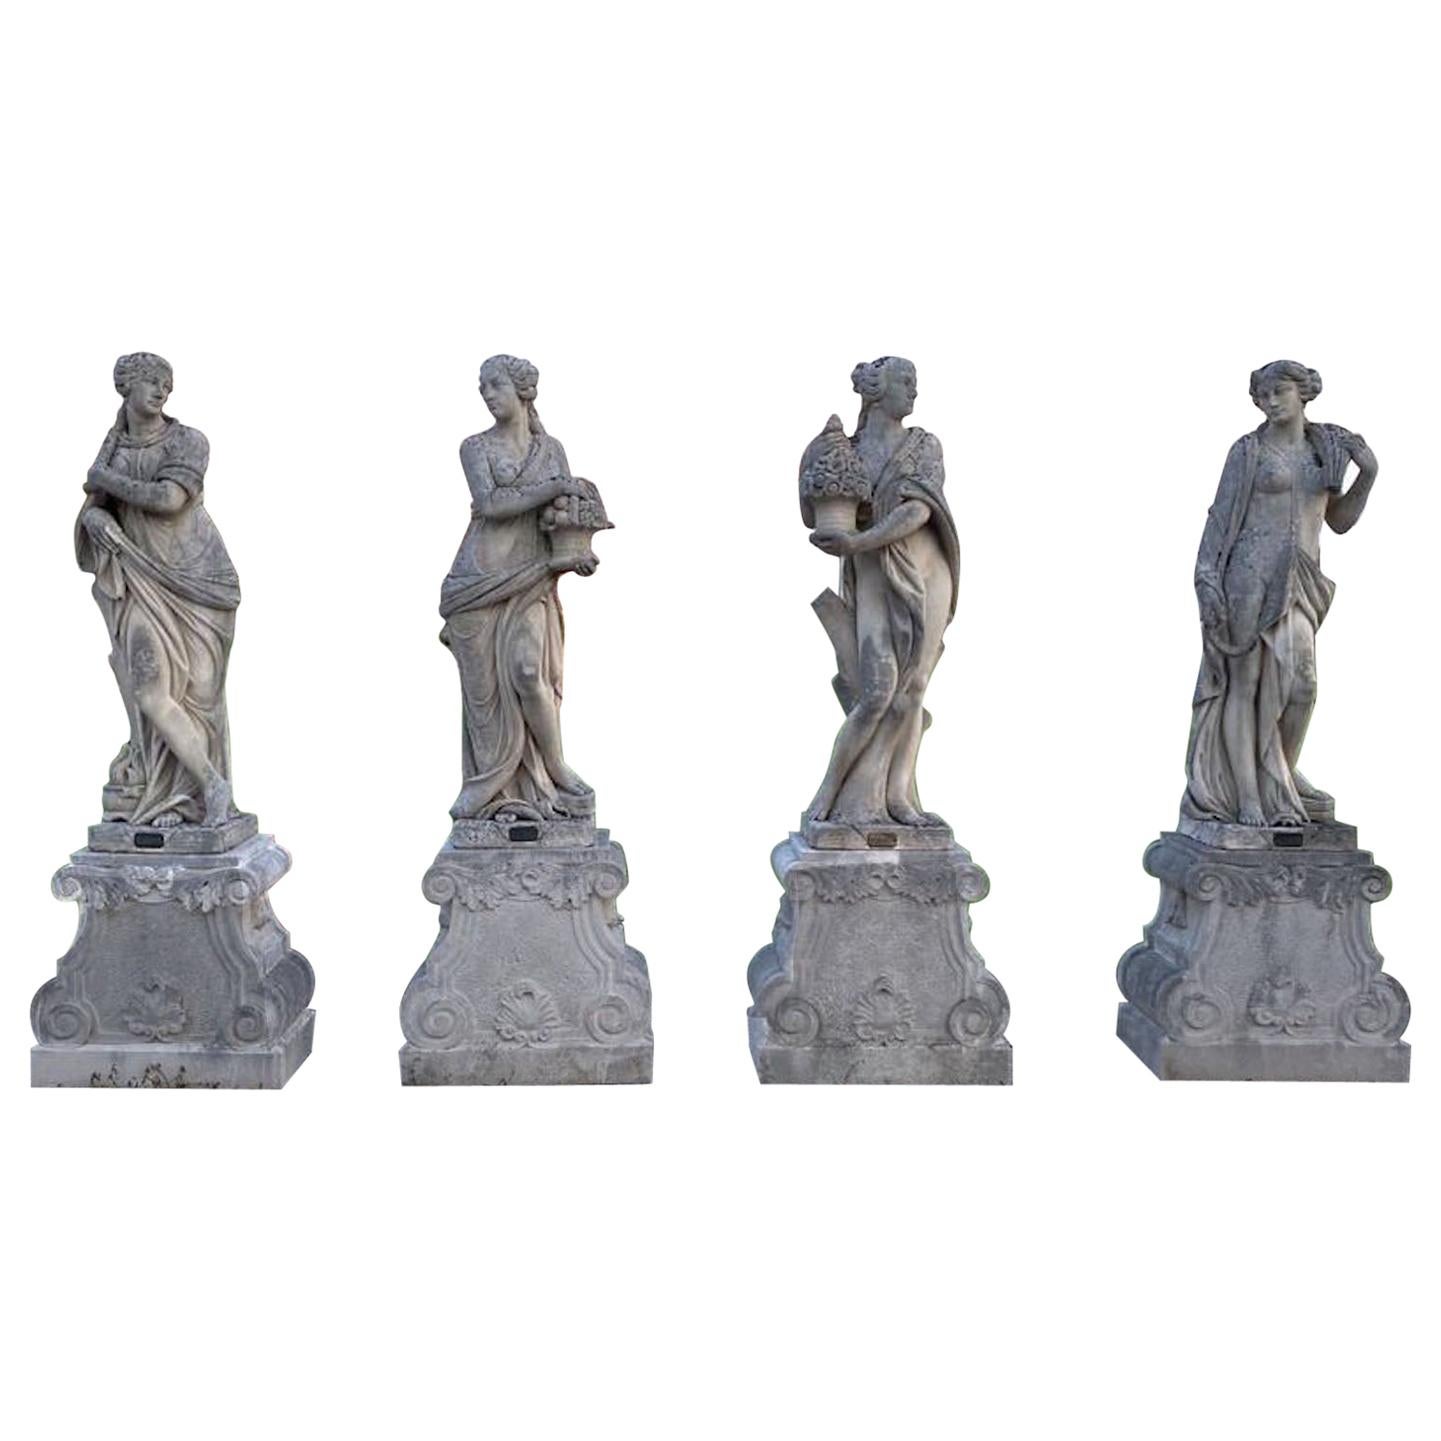 Italian Stone Garden Statues Representing the Four Seasons